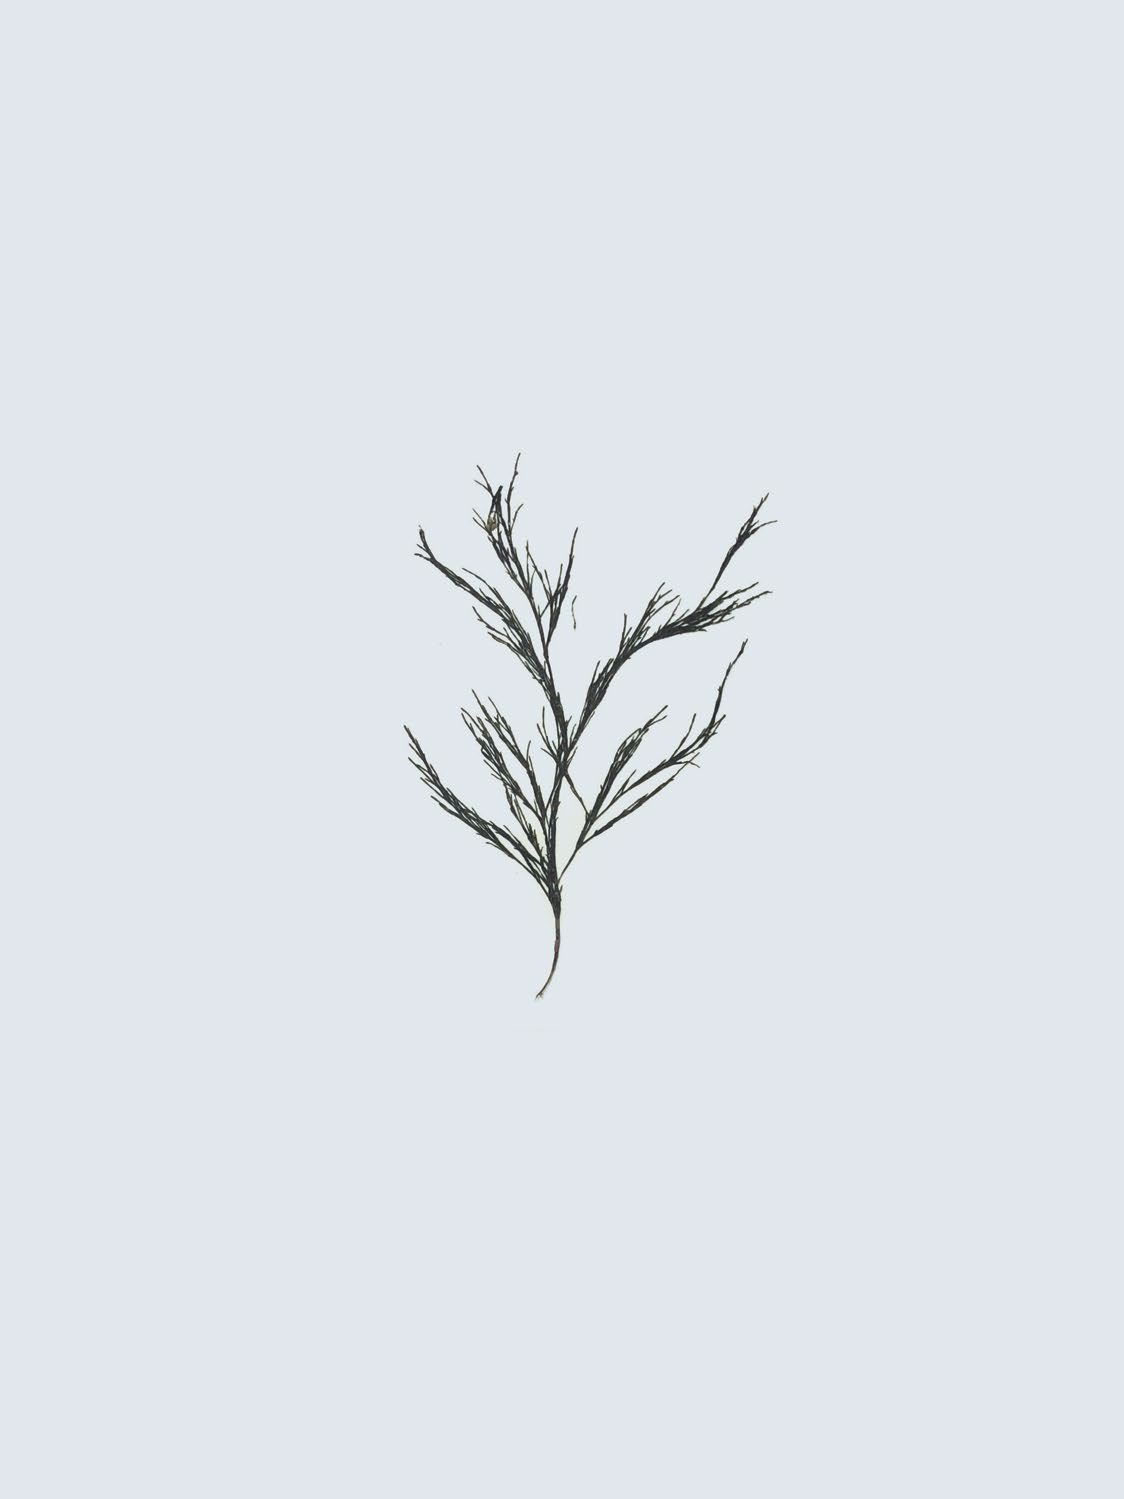 Cladophora wrightiana var. minor